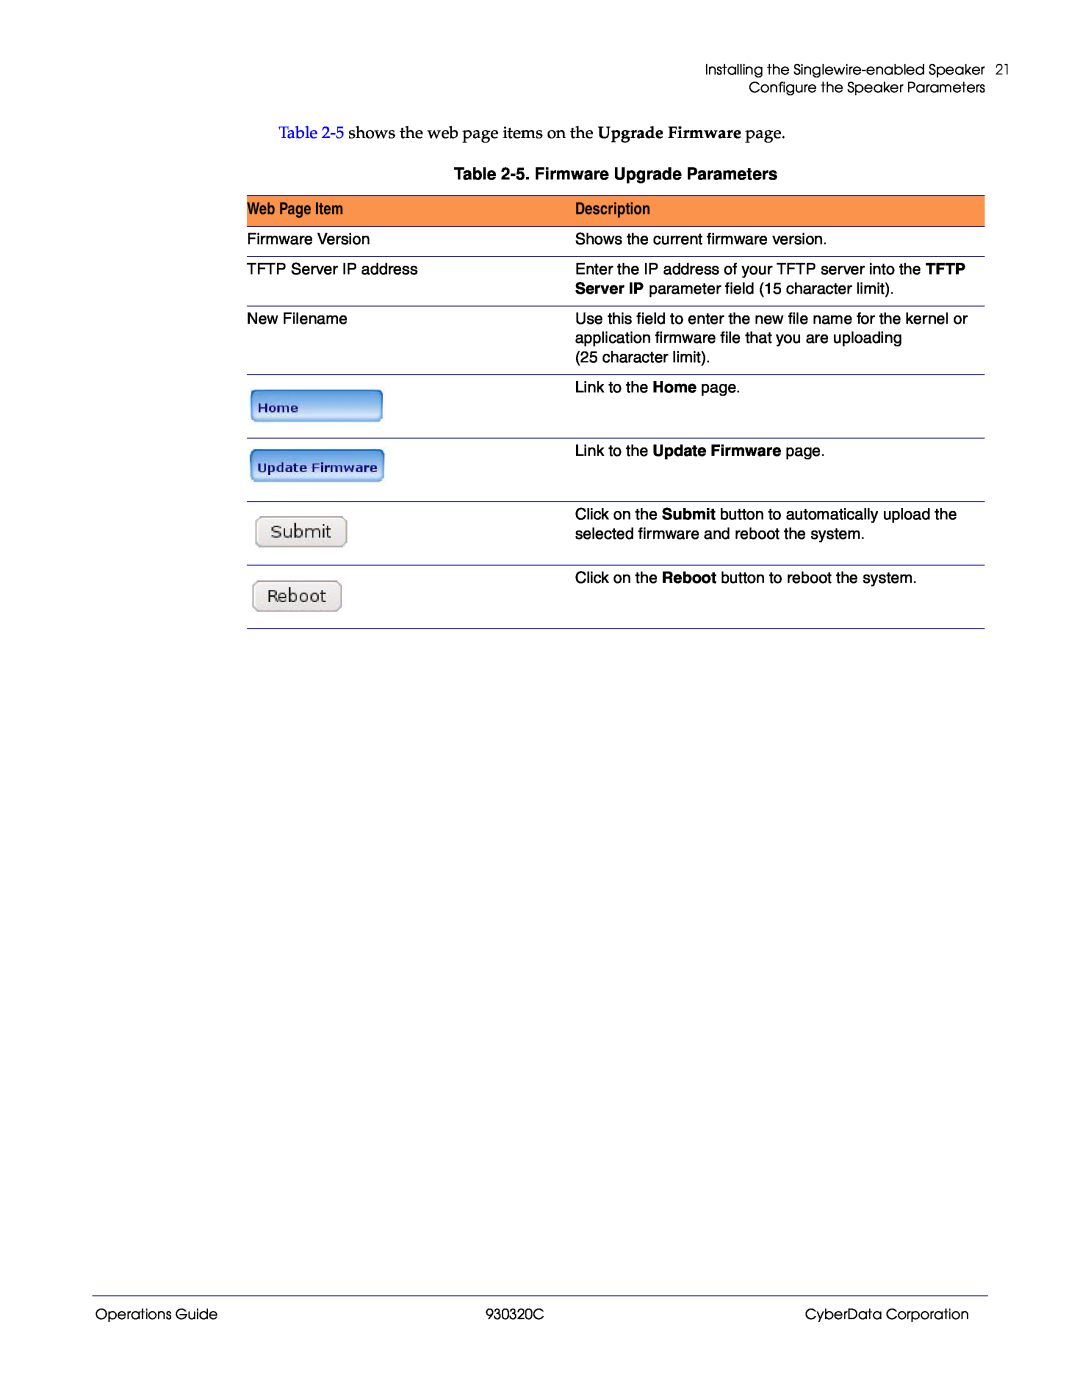 CyberData 11103 manual 5.Firmware Upgrade Parameters, Web Page Item, Description 